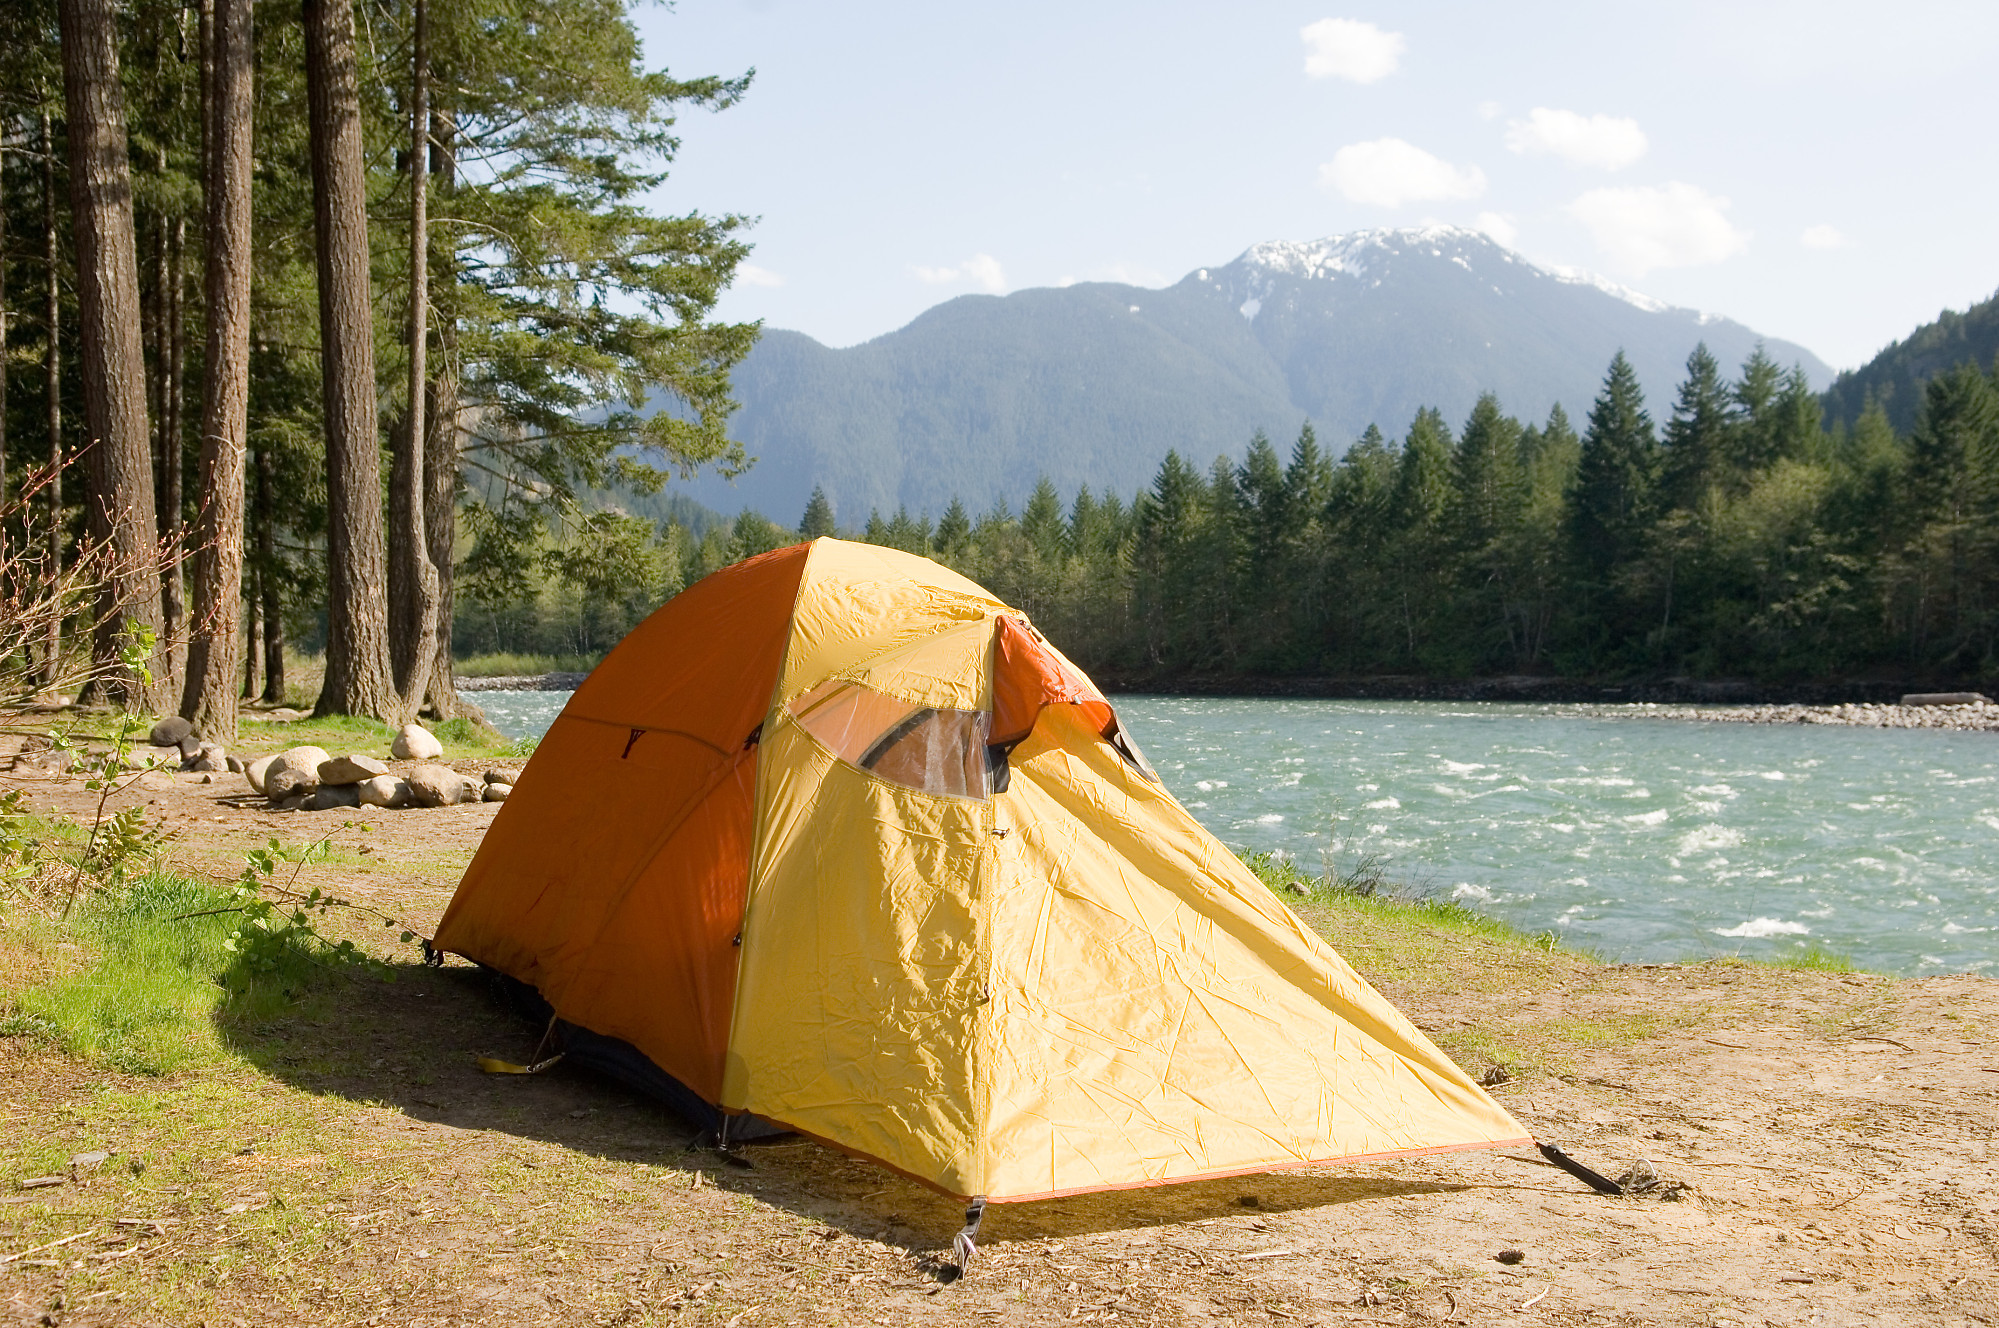 Camping site. Палатка best Camp Topaz 5. Палатка campact ten Lake trveler 3. Палатка Трамп Камп 5. Палатка Retki 2000 Tent.